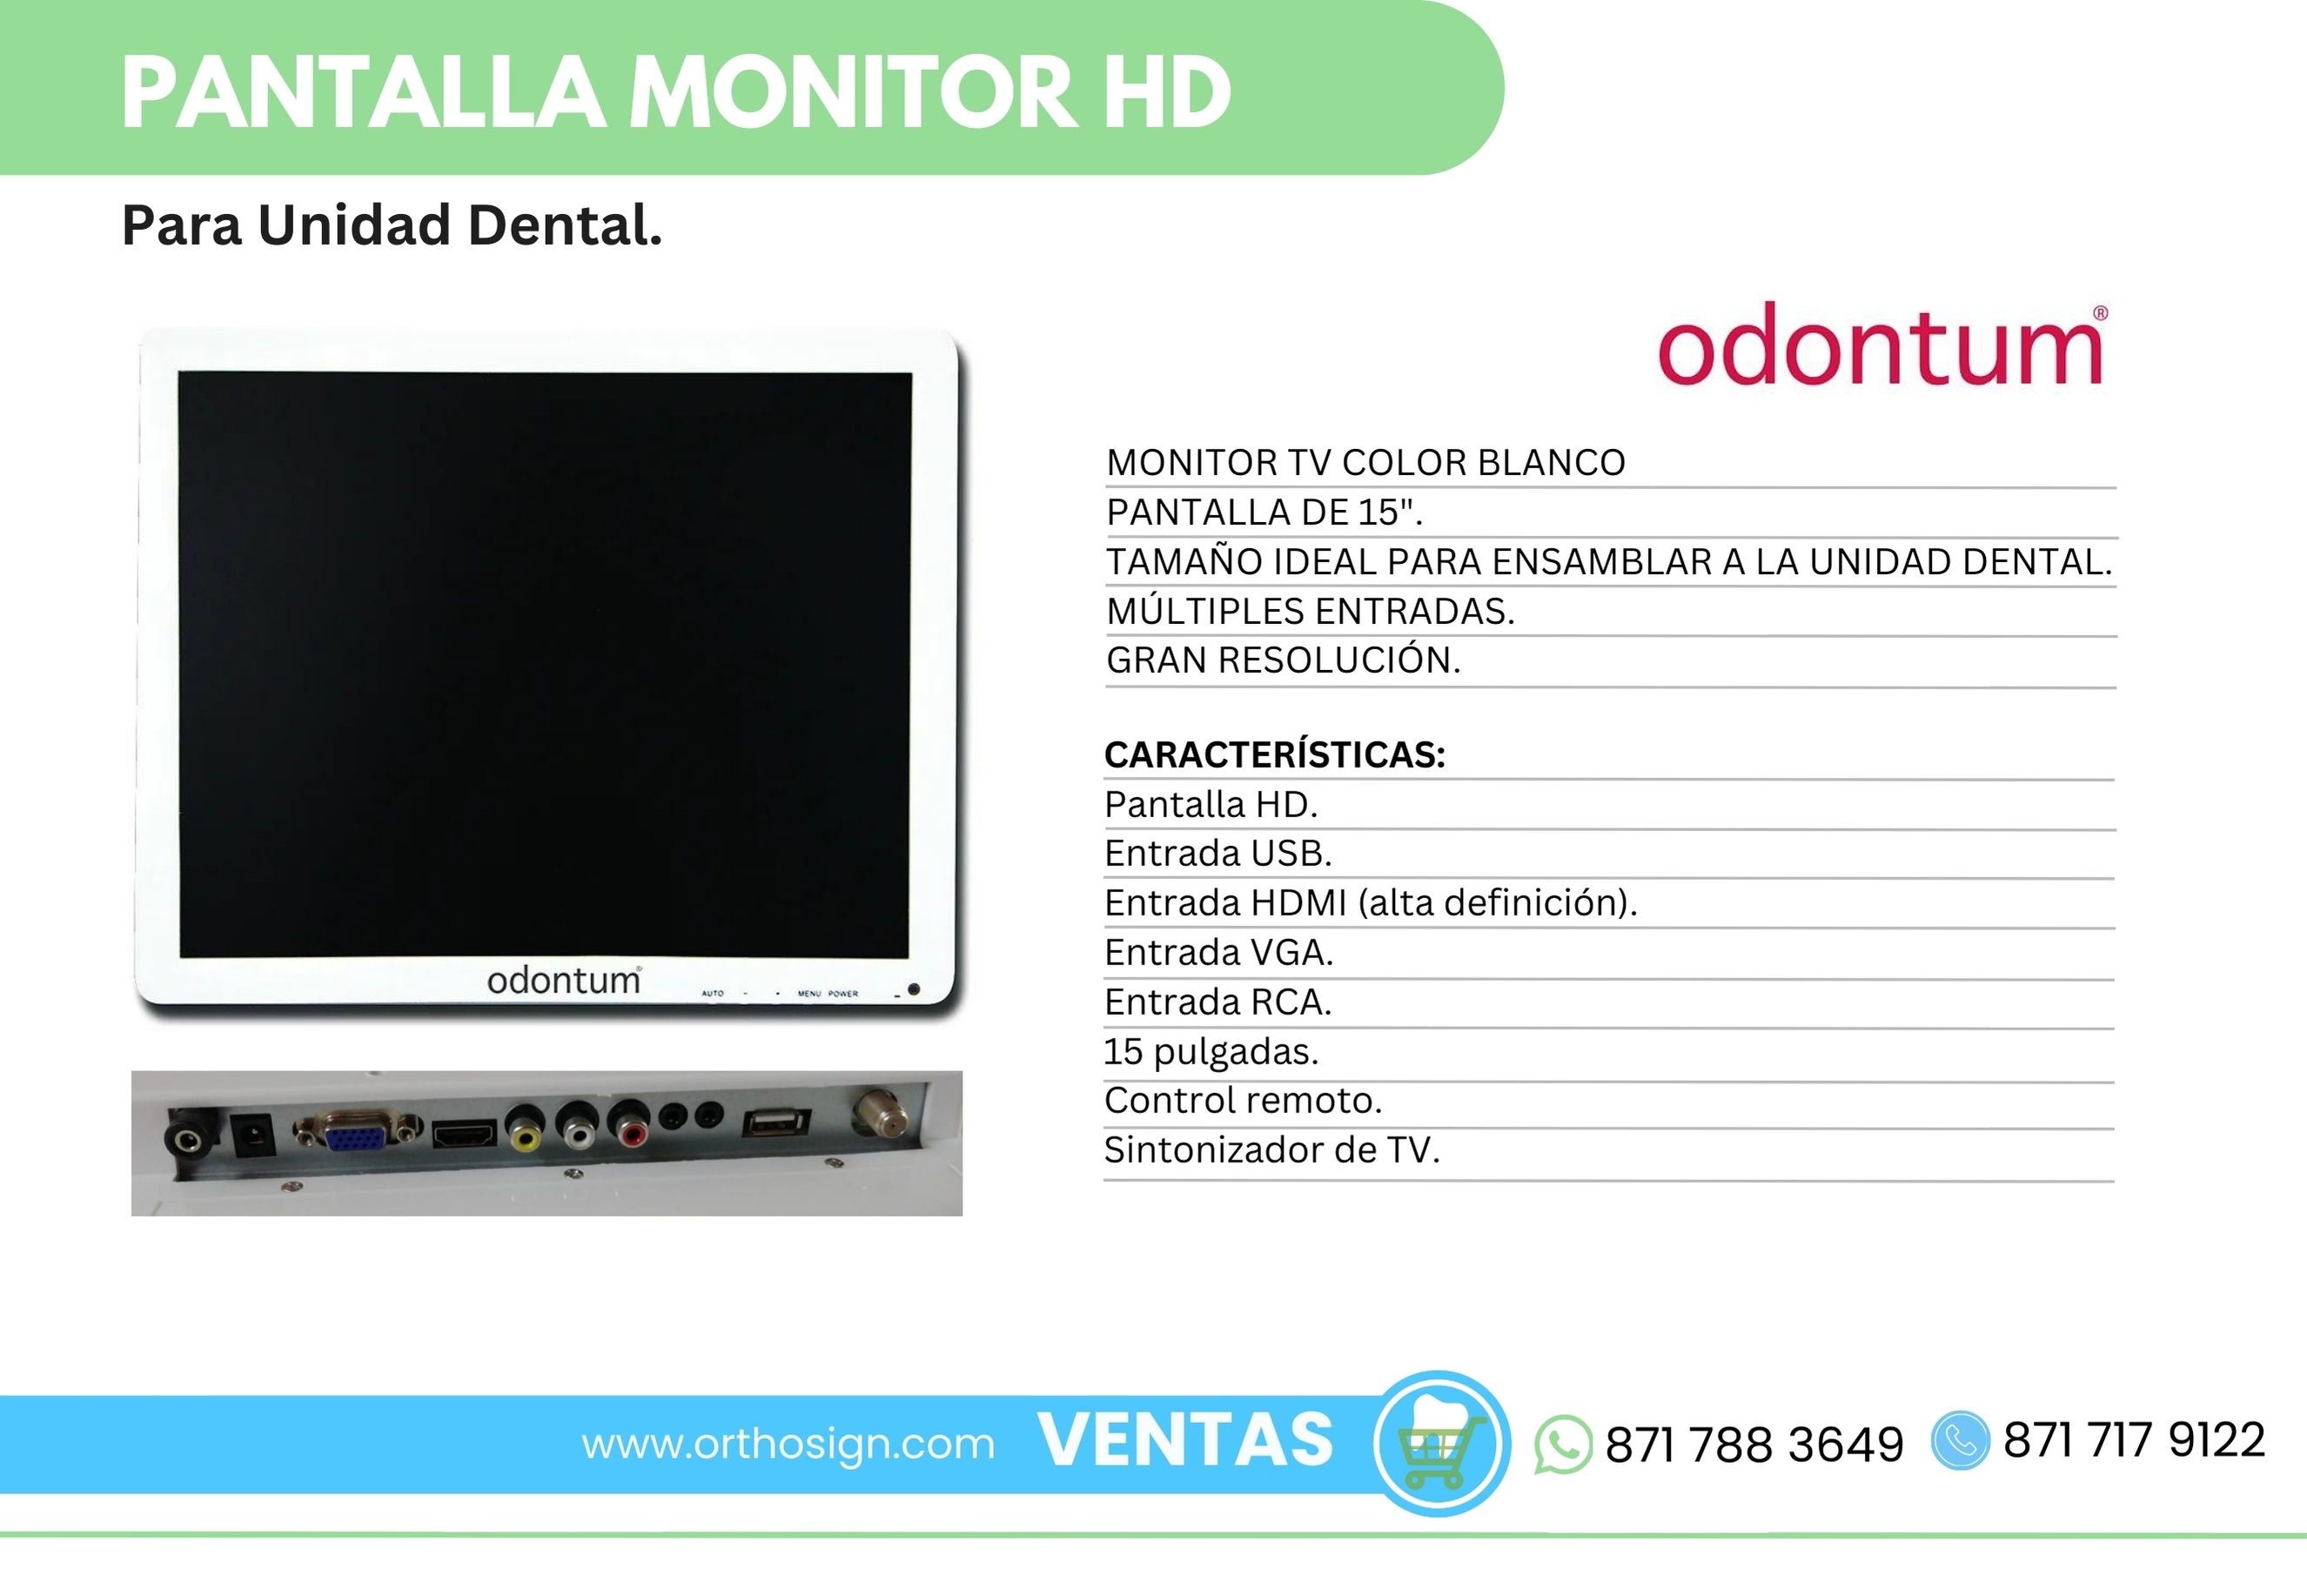 Pantalla Monitor HD Odontum para Unidad Dental Orthosign